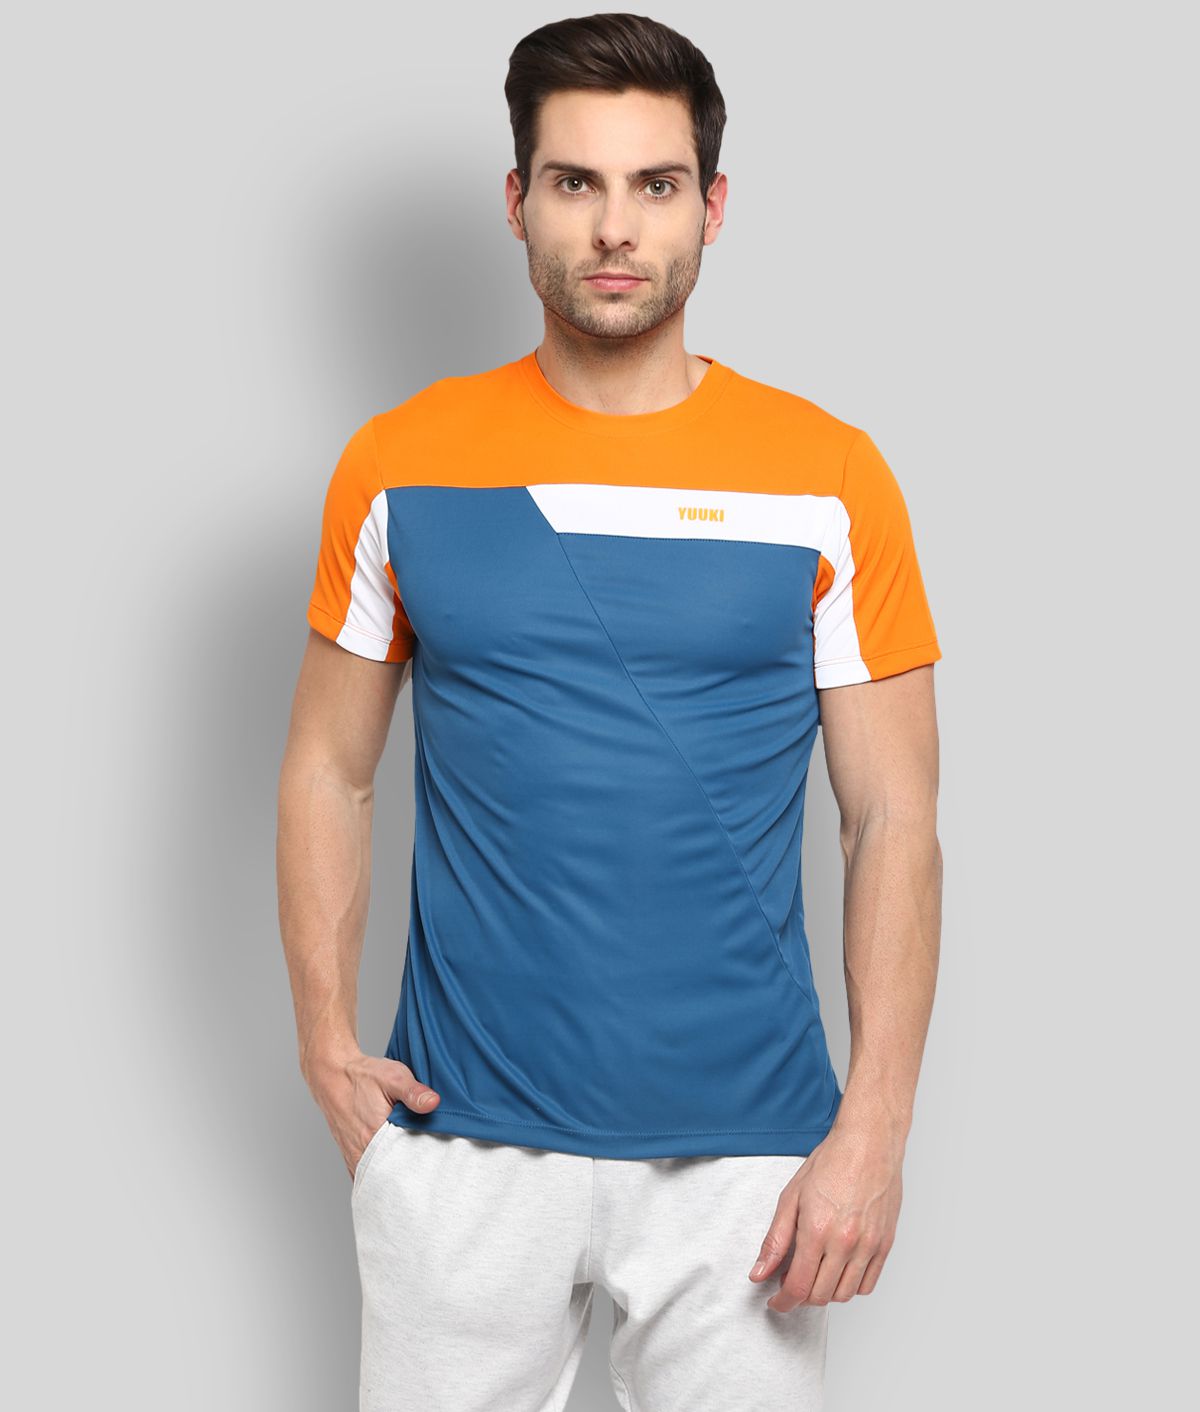     			YUUKI - Blue Polyester Regular Fit Men's Sports T-Shirt ( Pack of 1 )